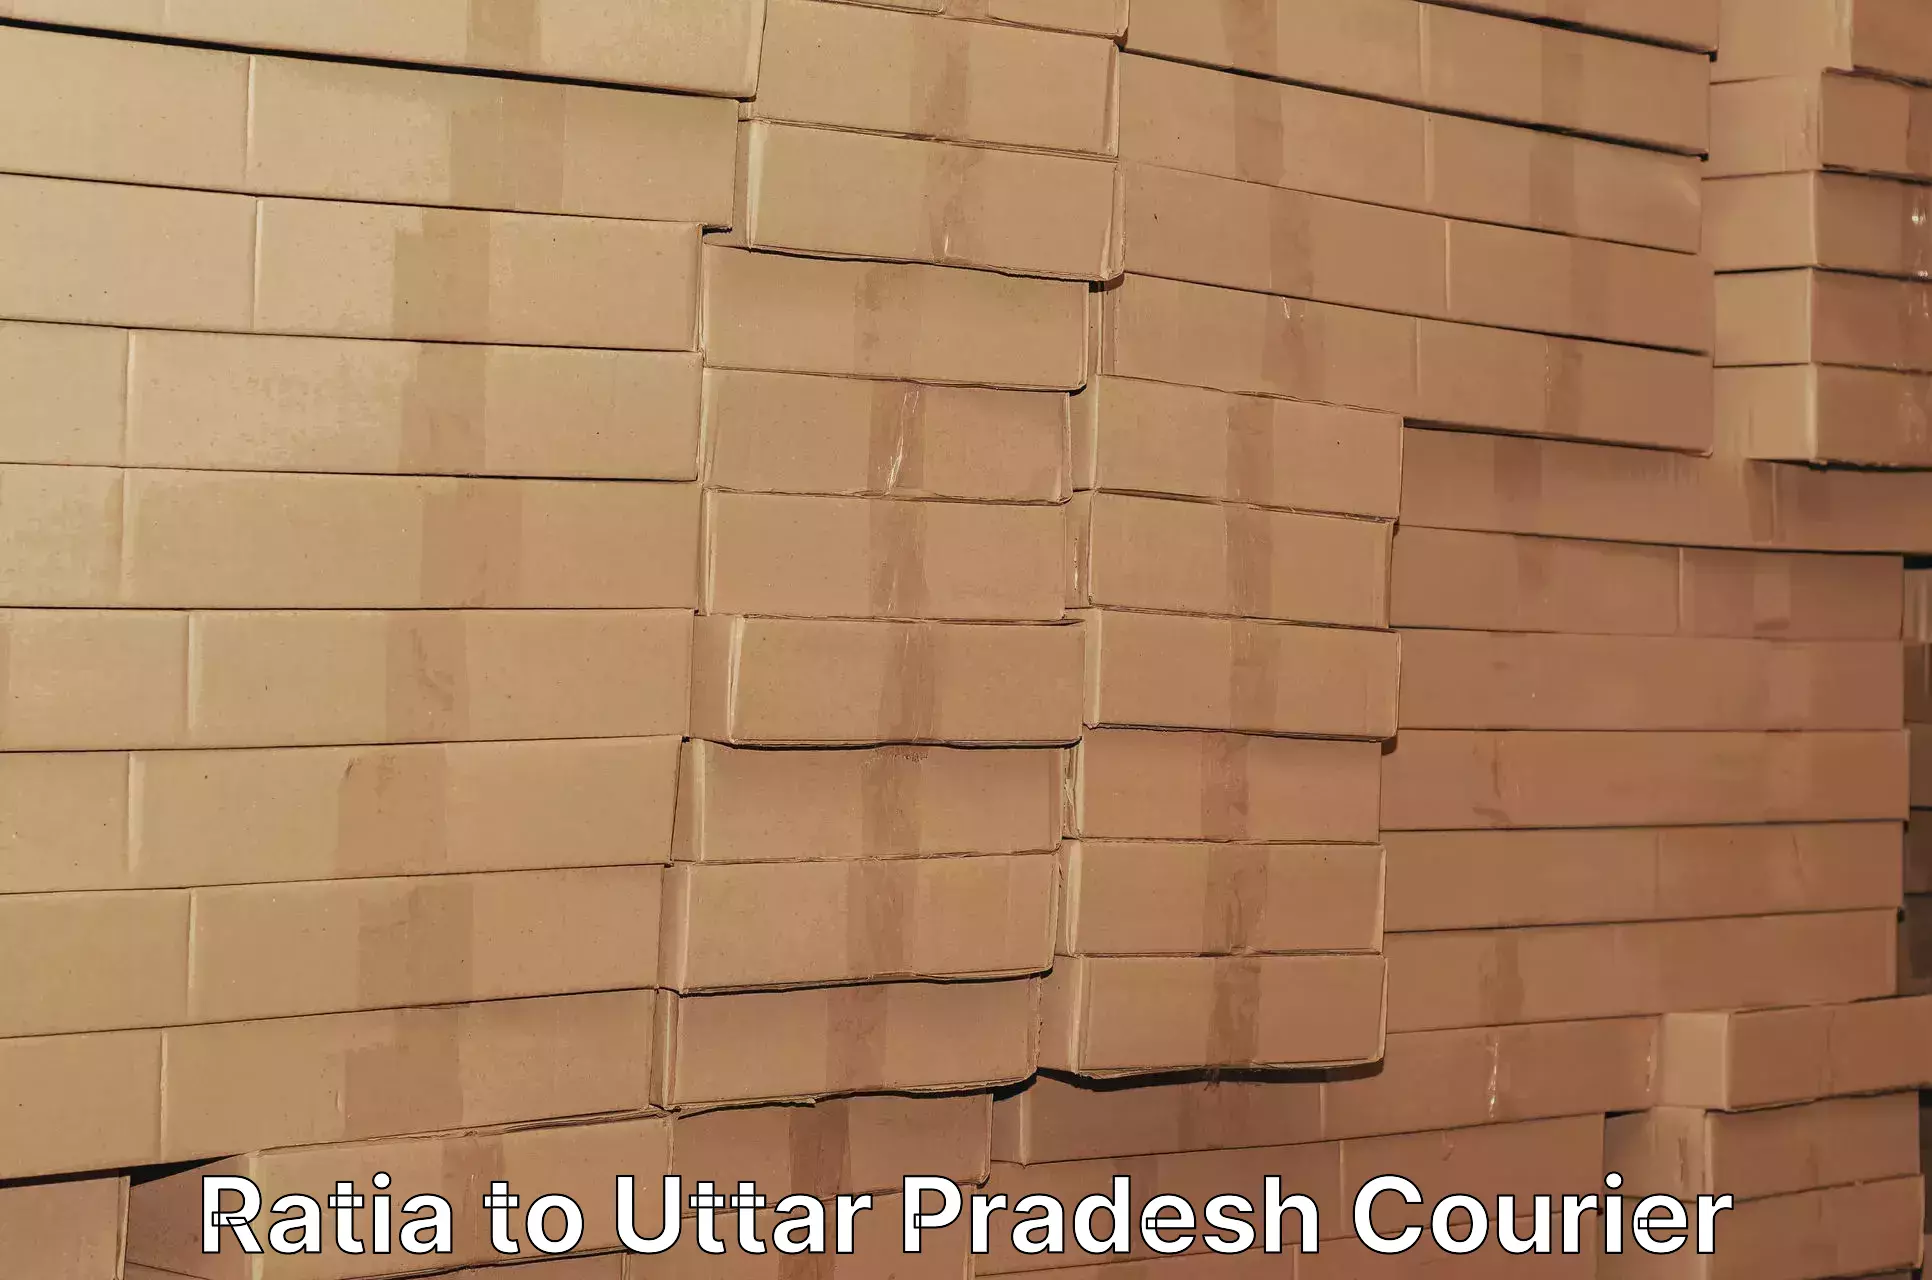 Express package handling Ratia to Uttar Pradesh